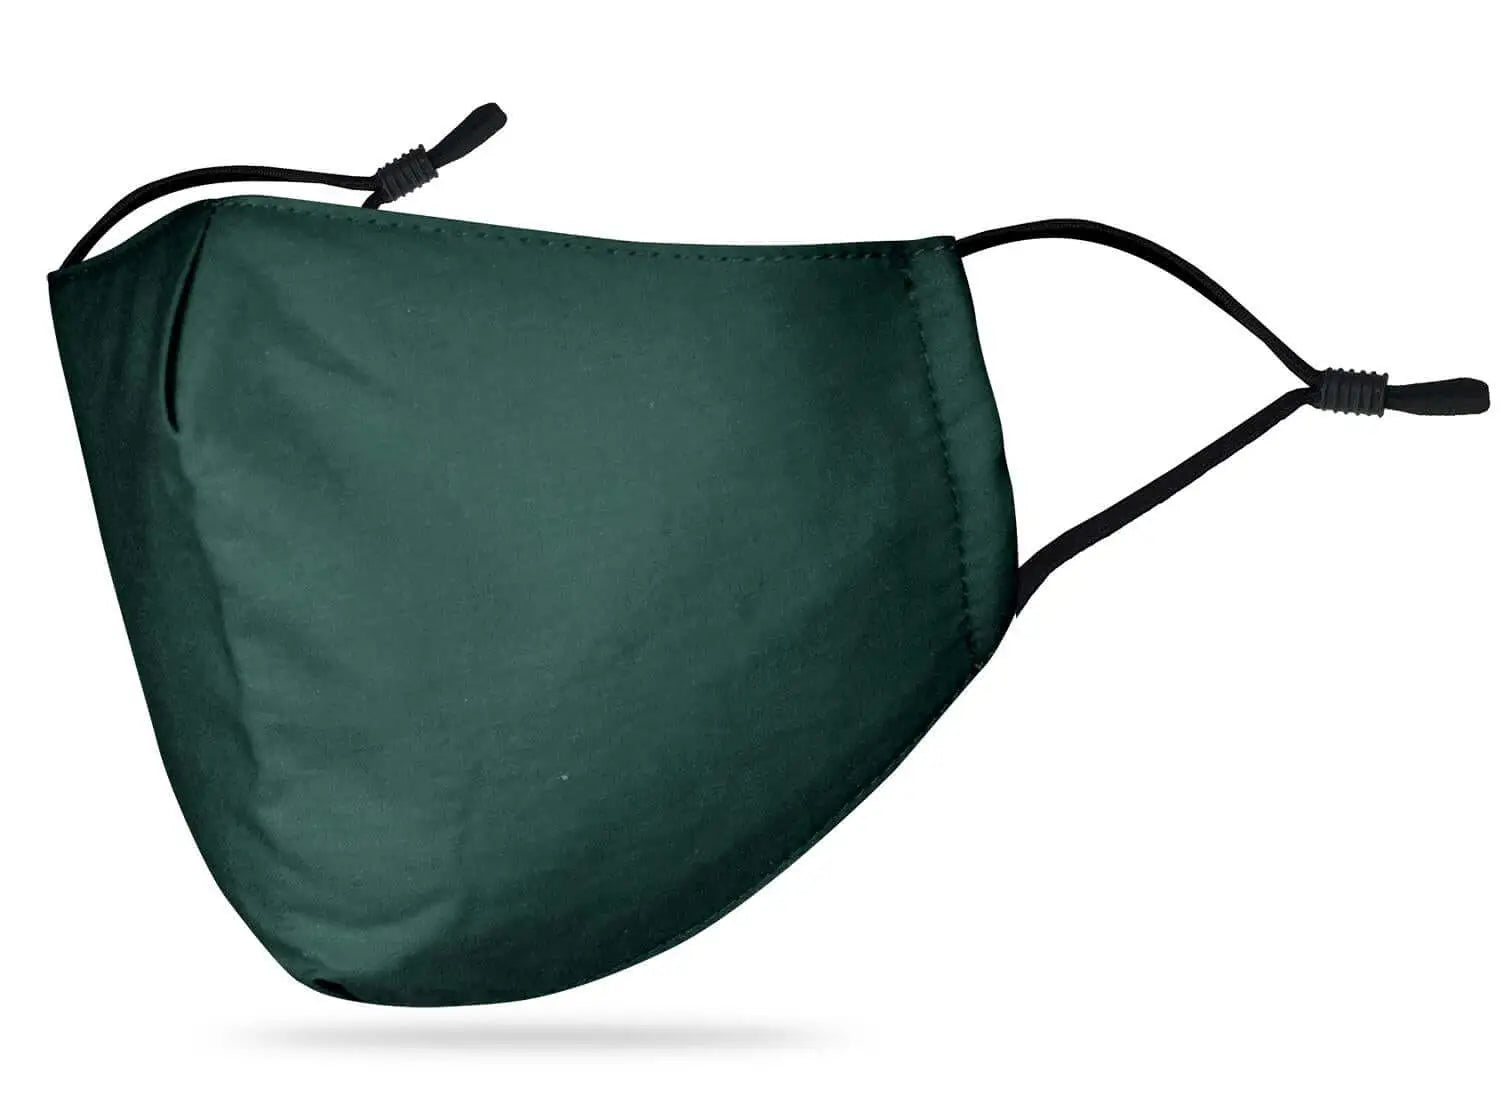 Green cotton fashion face mask with black elastic straps - 3D Design 100% Cotton.